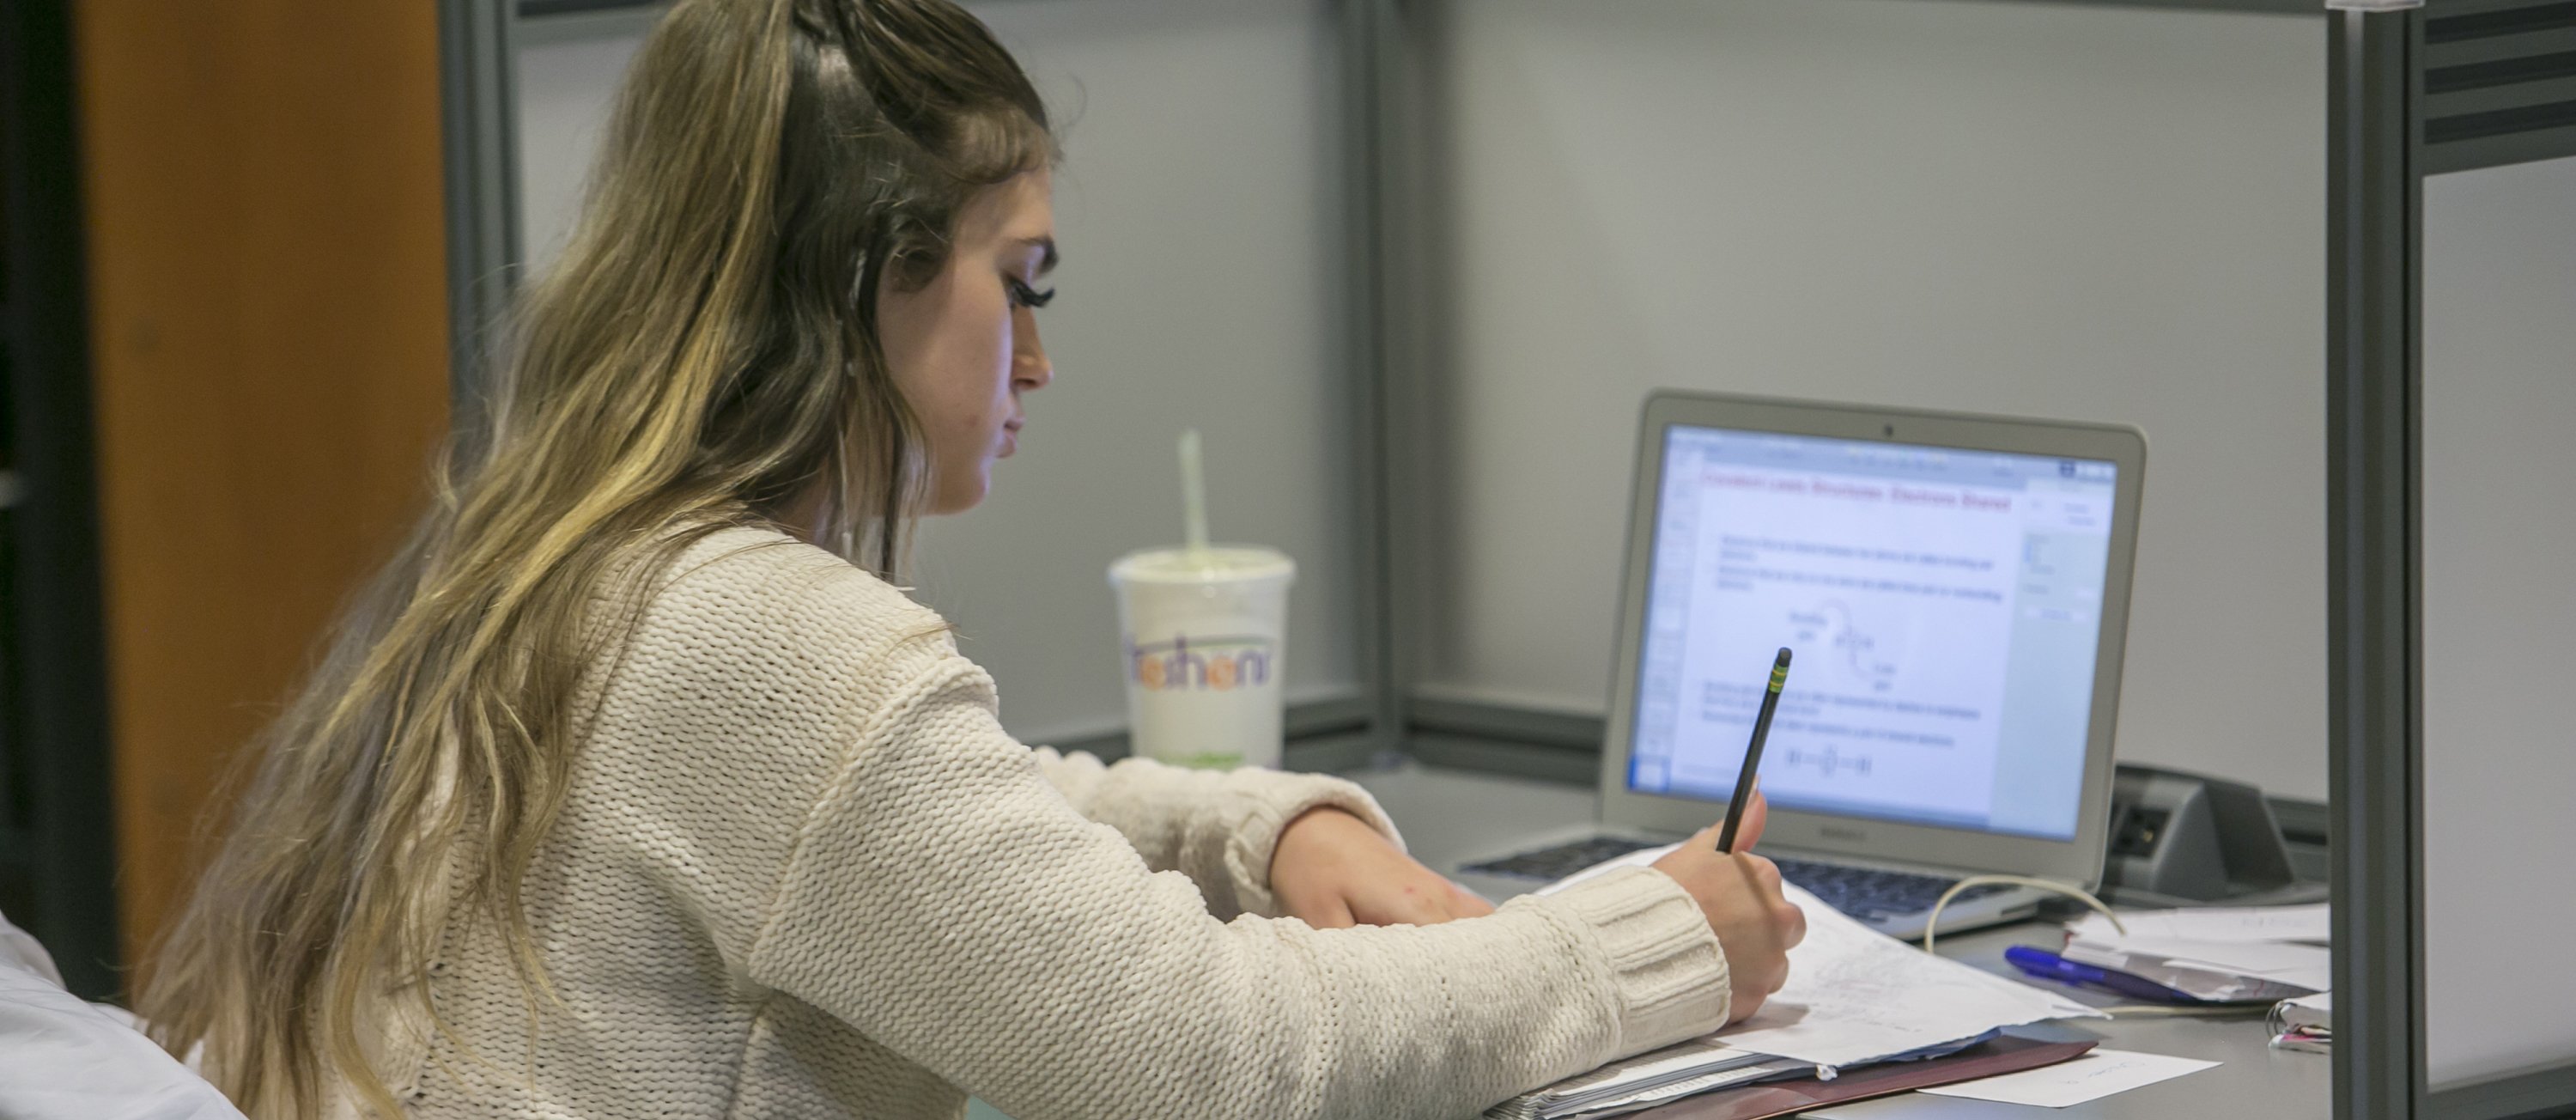 student writing near a laptop